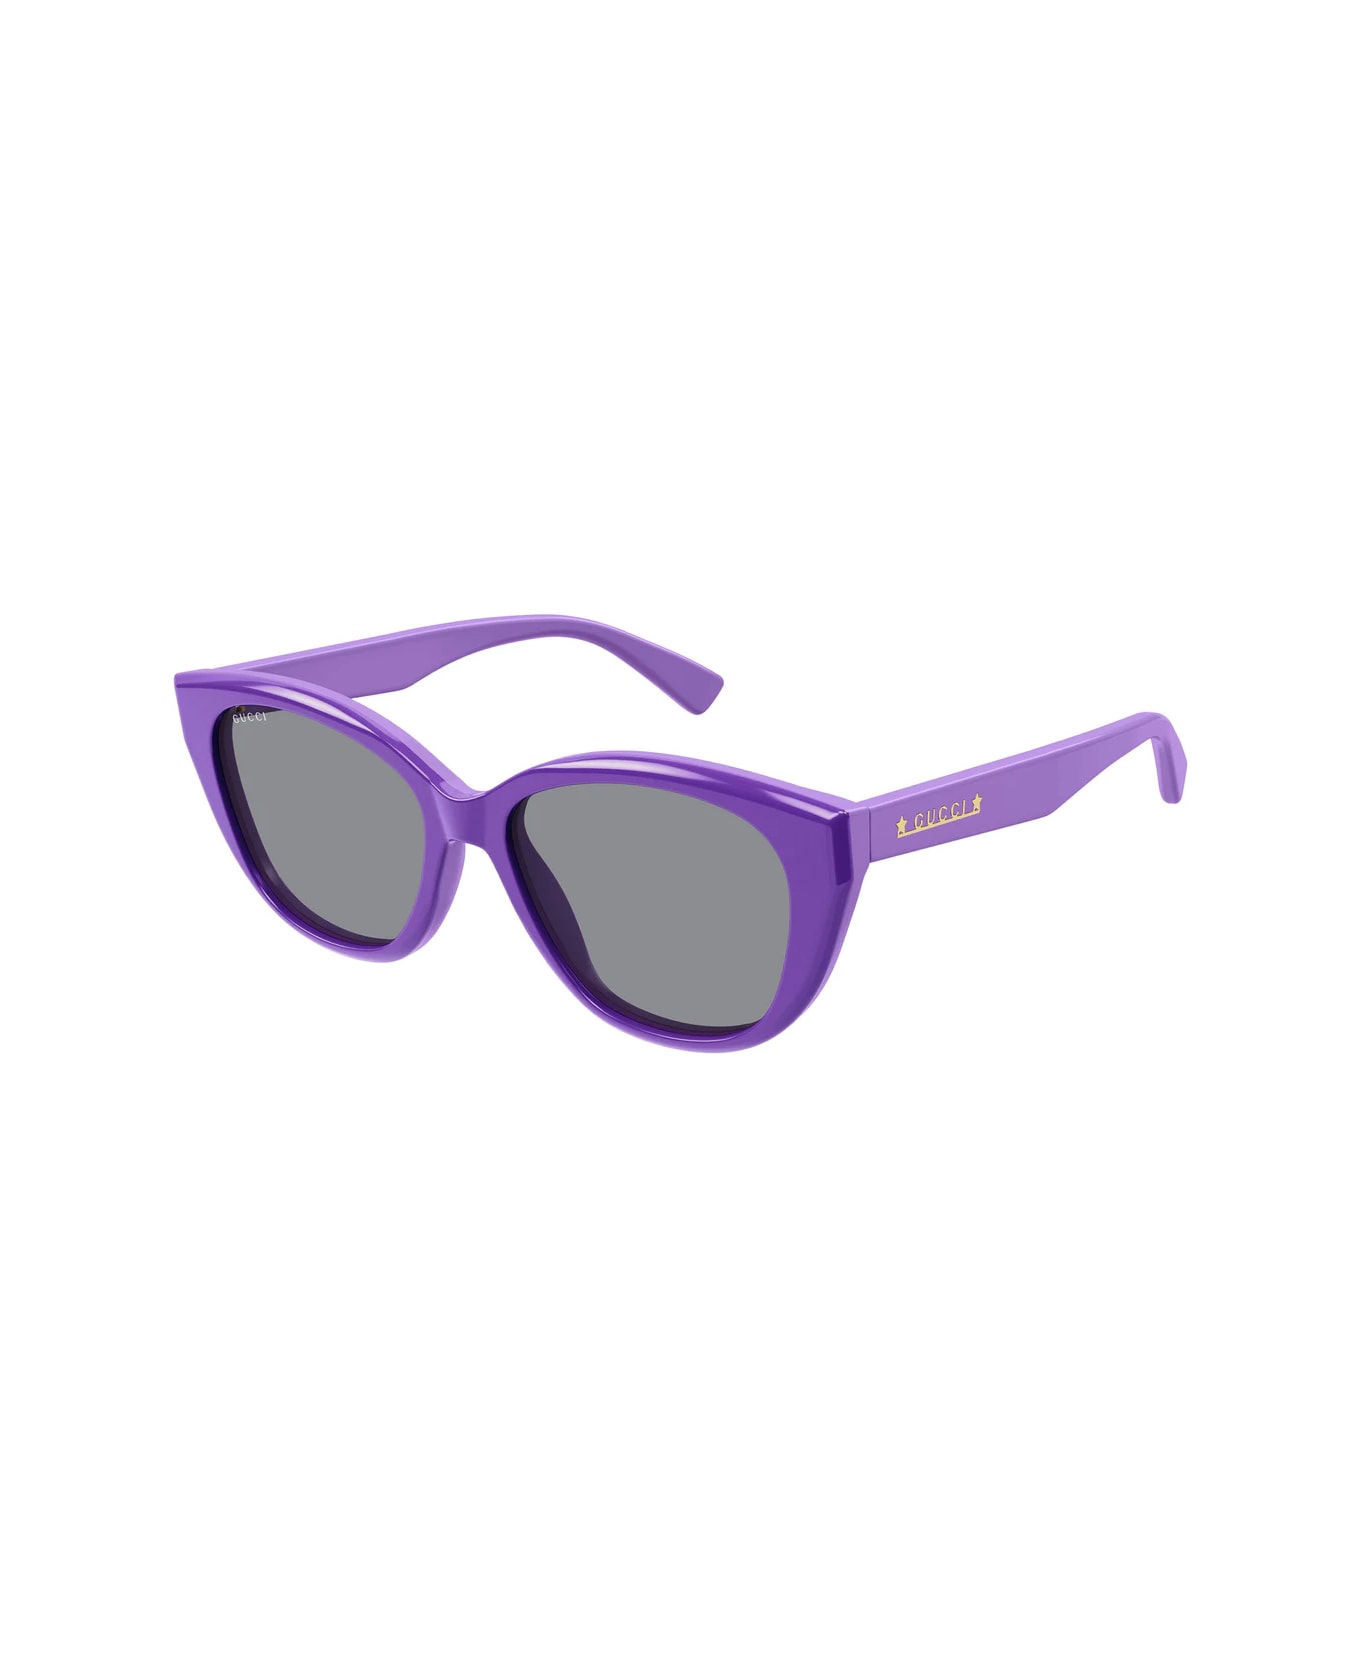 Gucci Eyewear Gucci Gg1588s Linea Lettering 004 Sunglasses - Viola サングラス